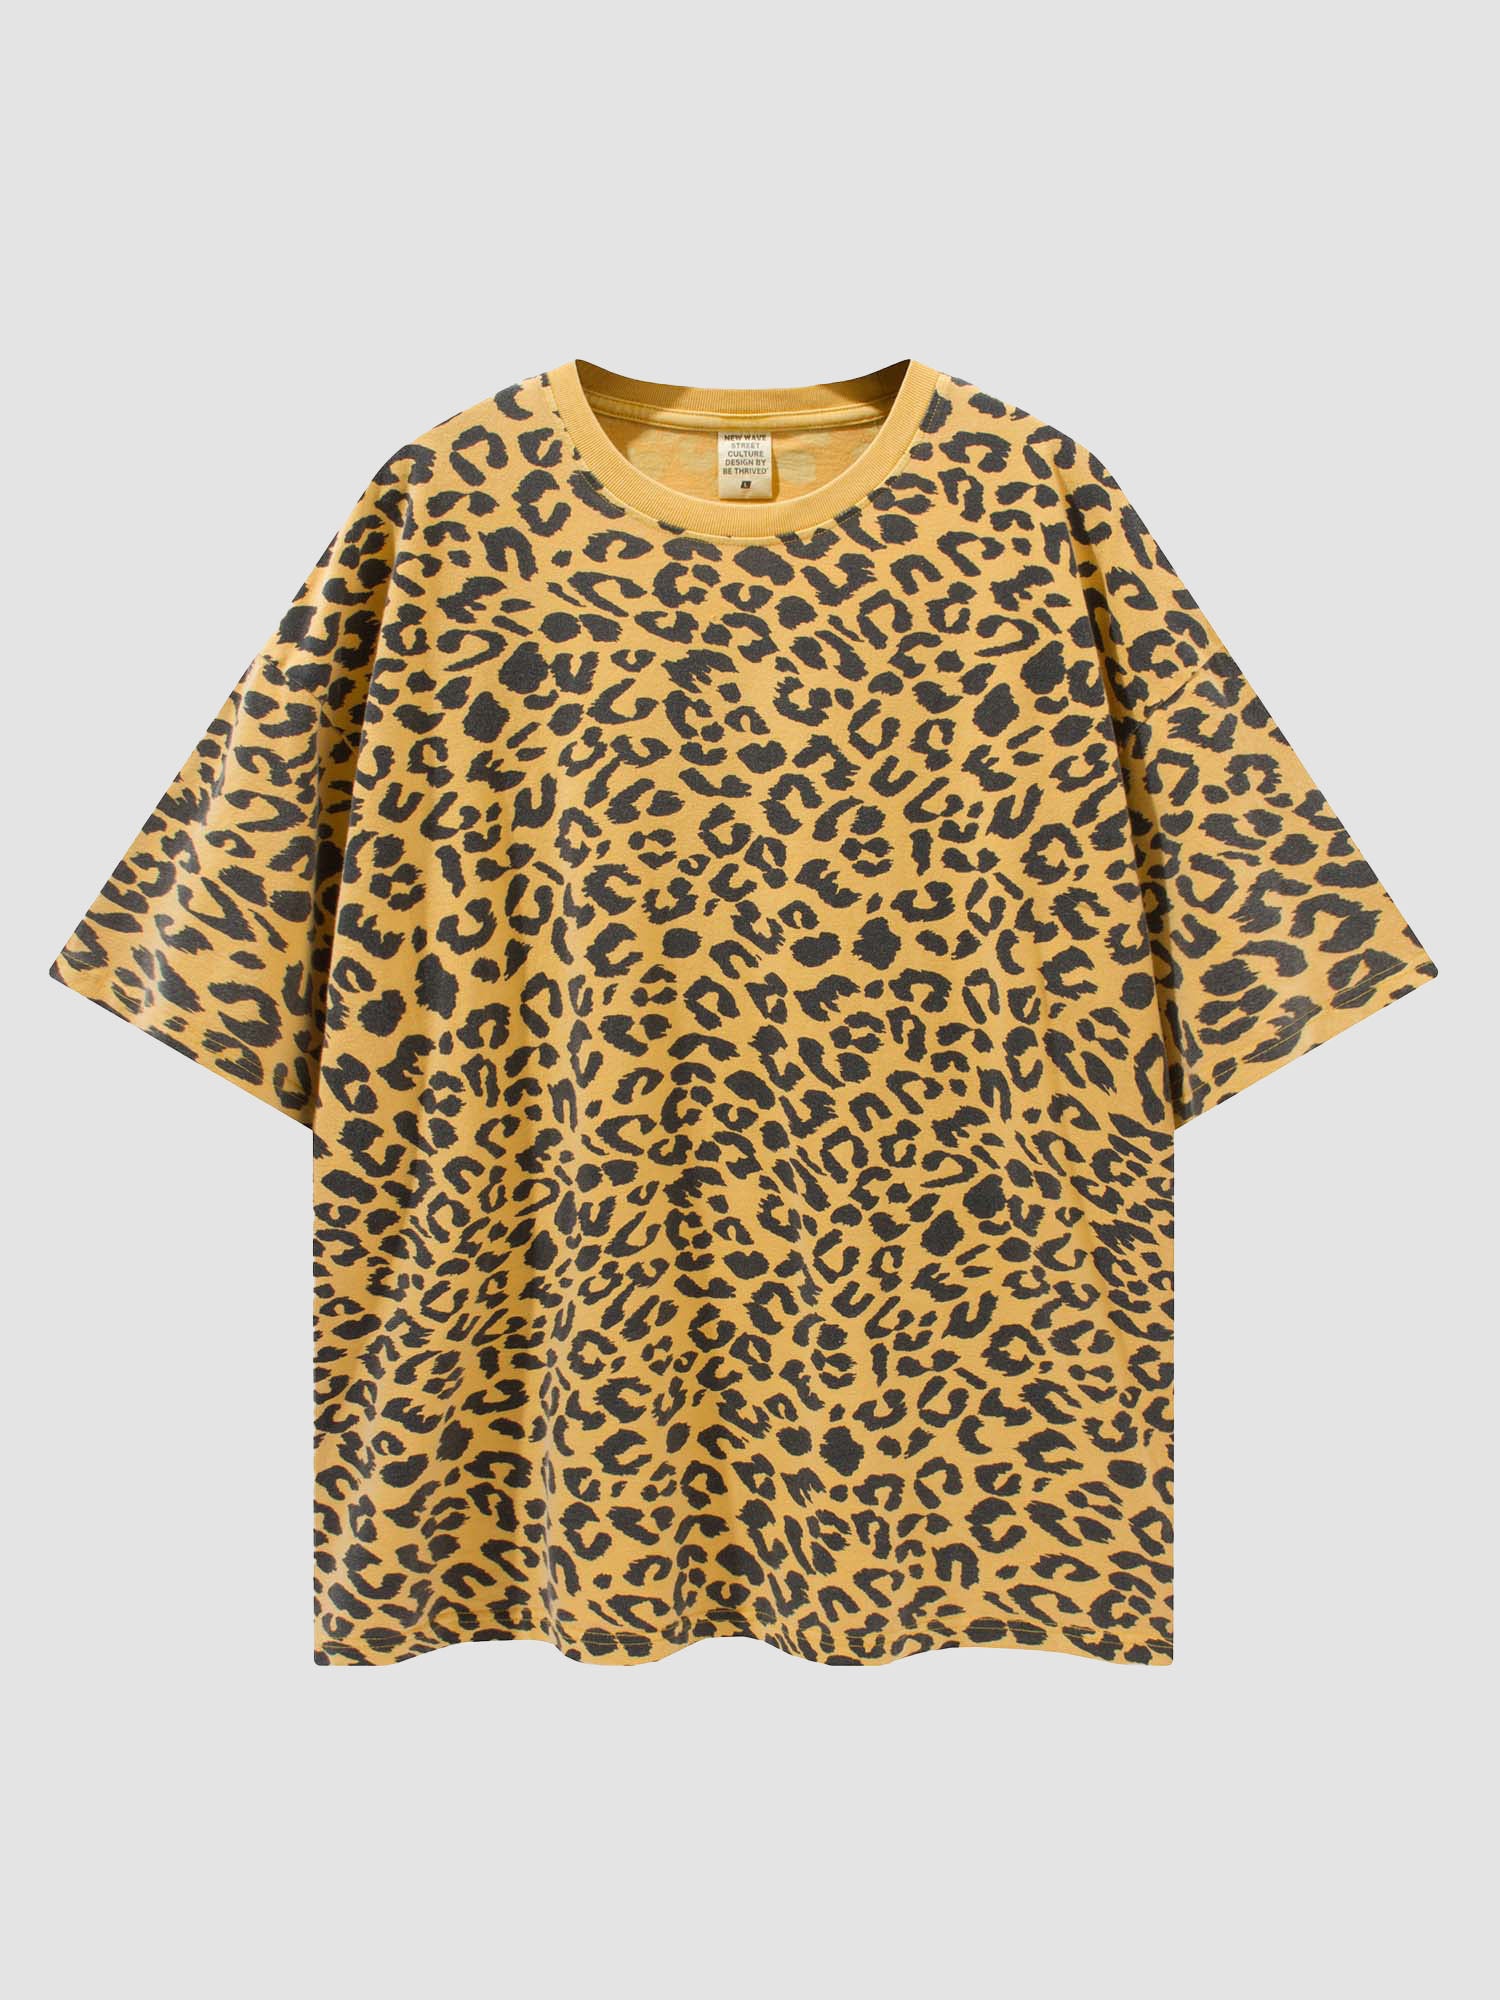 JUSTNOTAG Yellow leopard Print 100% Cotton Short Sleeve Tee